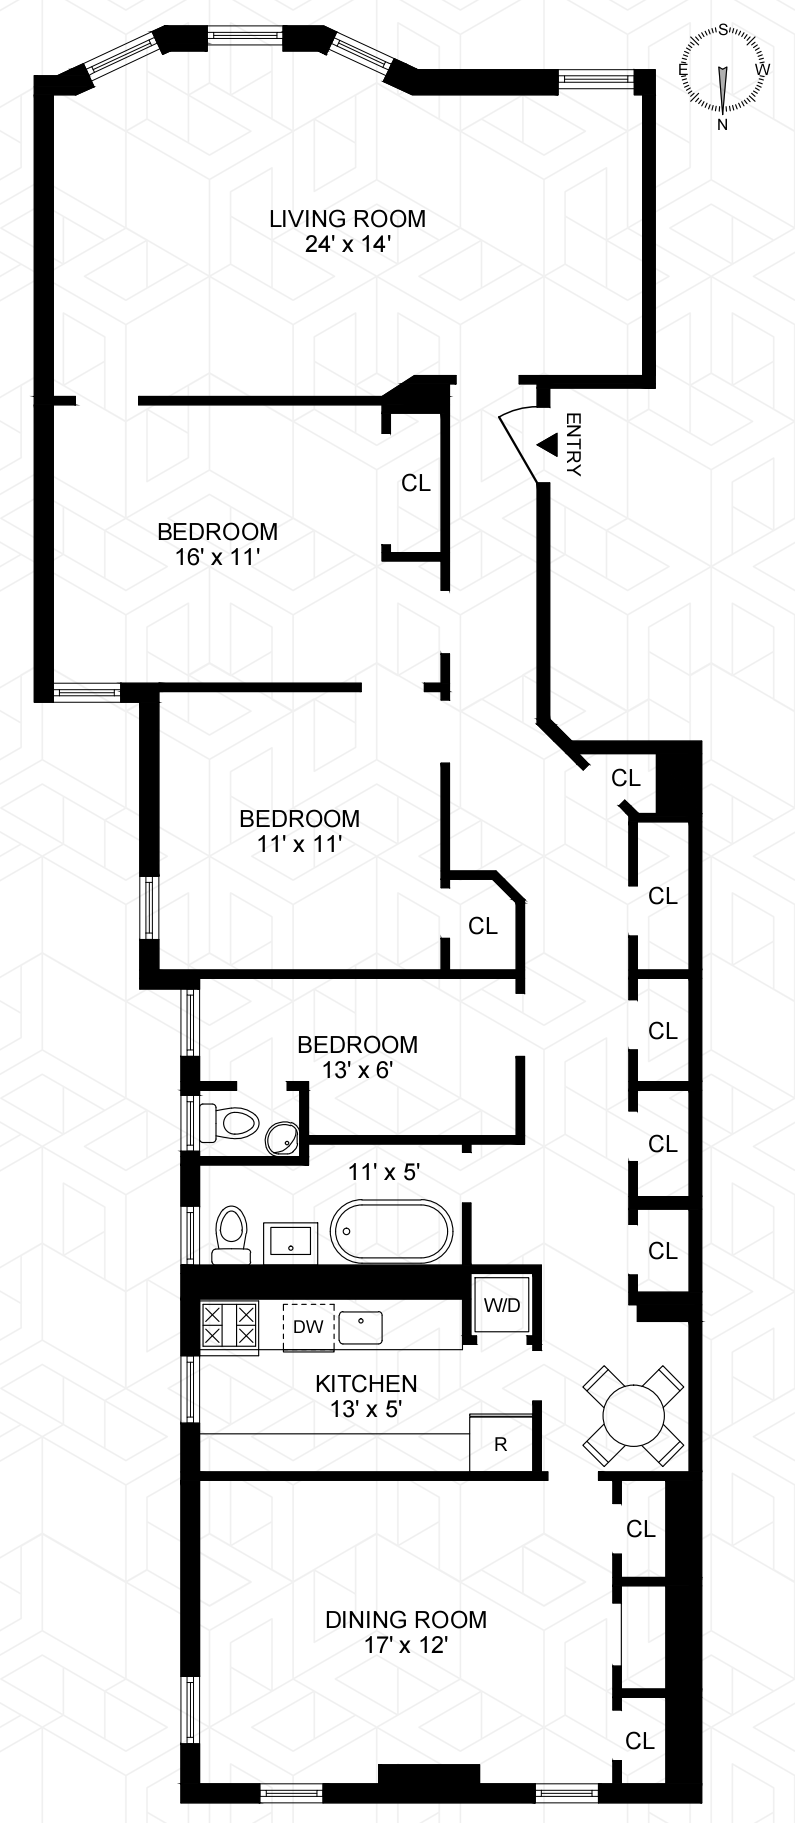 Floorplan for 253 Garfield Place, 4R